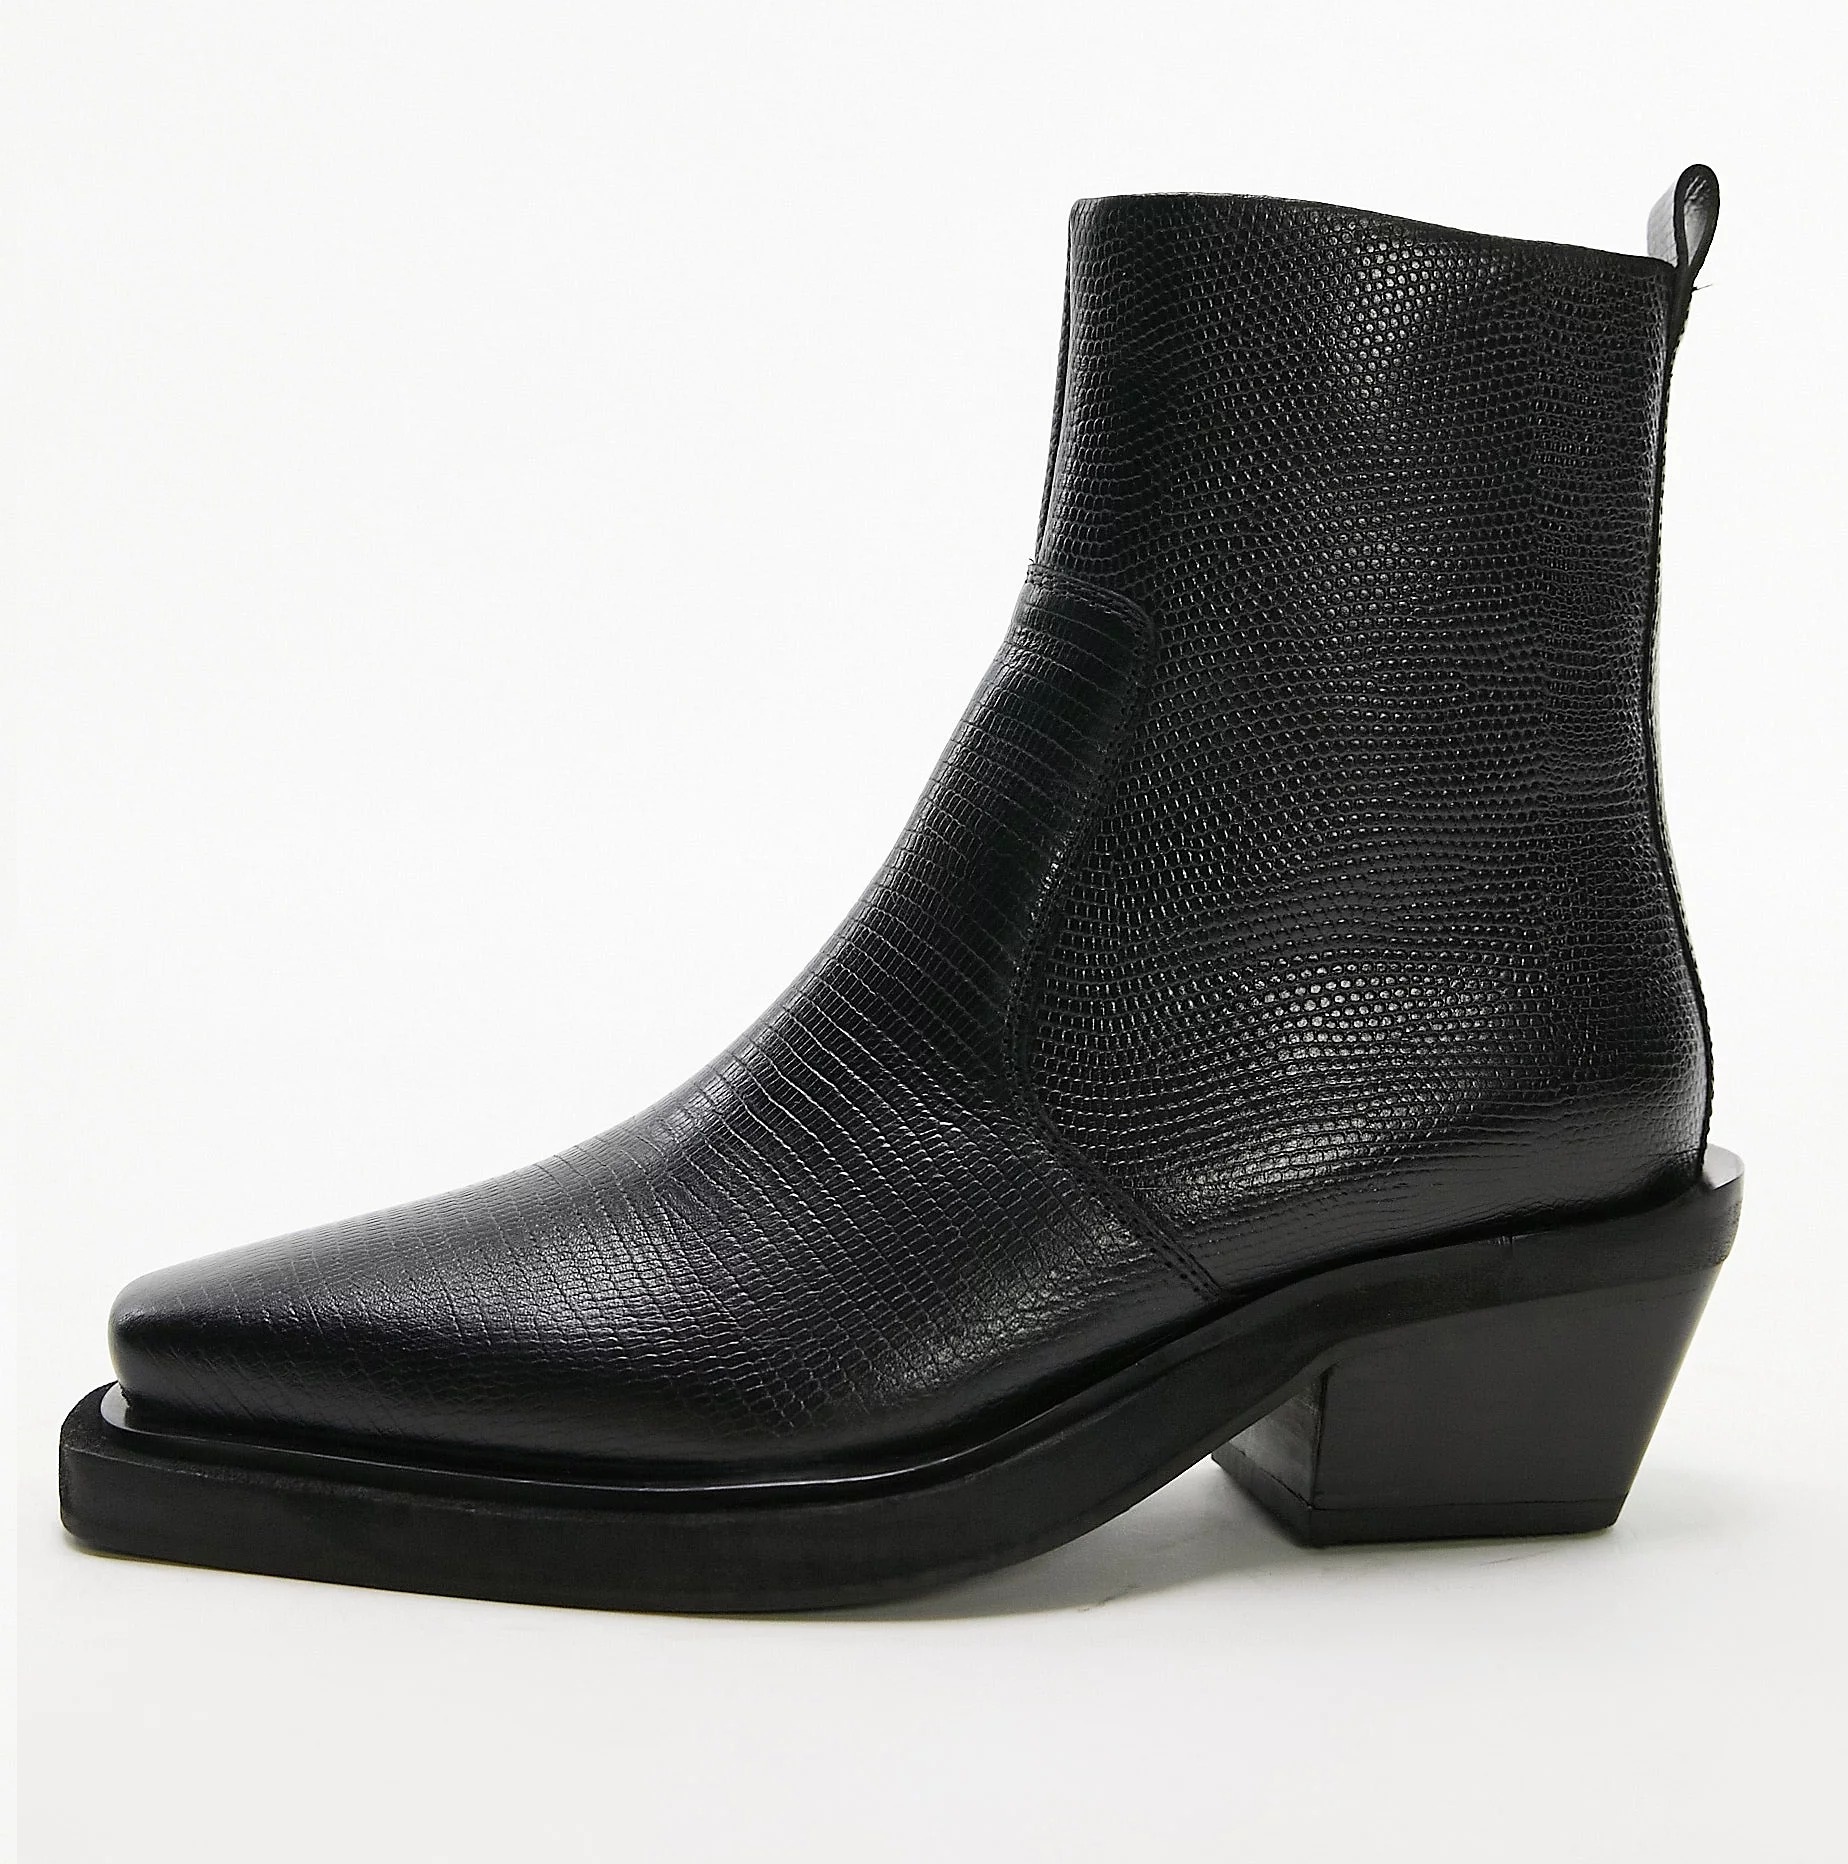 Ботильоны Topshop Lara Leather Western Style Ankle, черный сандалии topshop keira leather western buckle черный